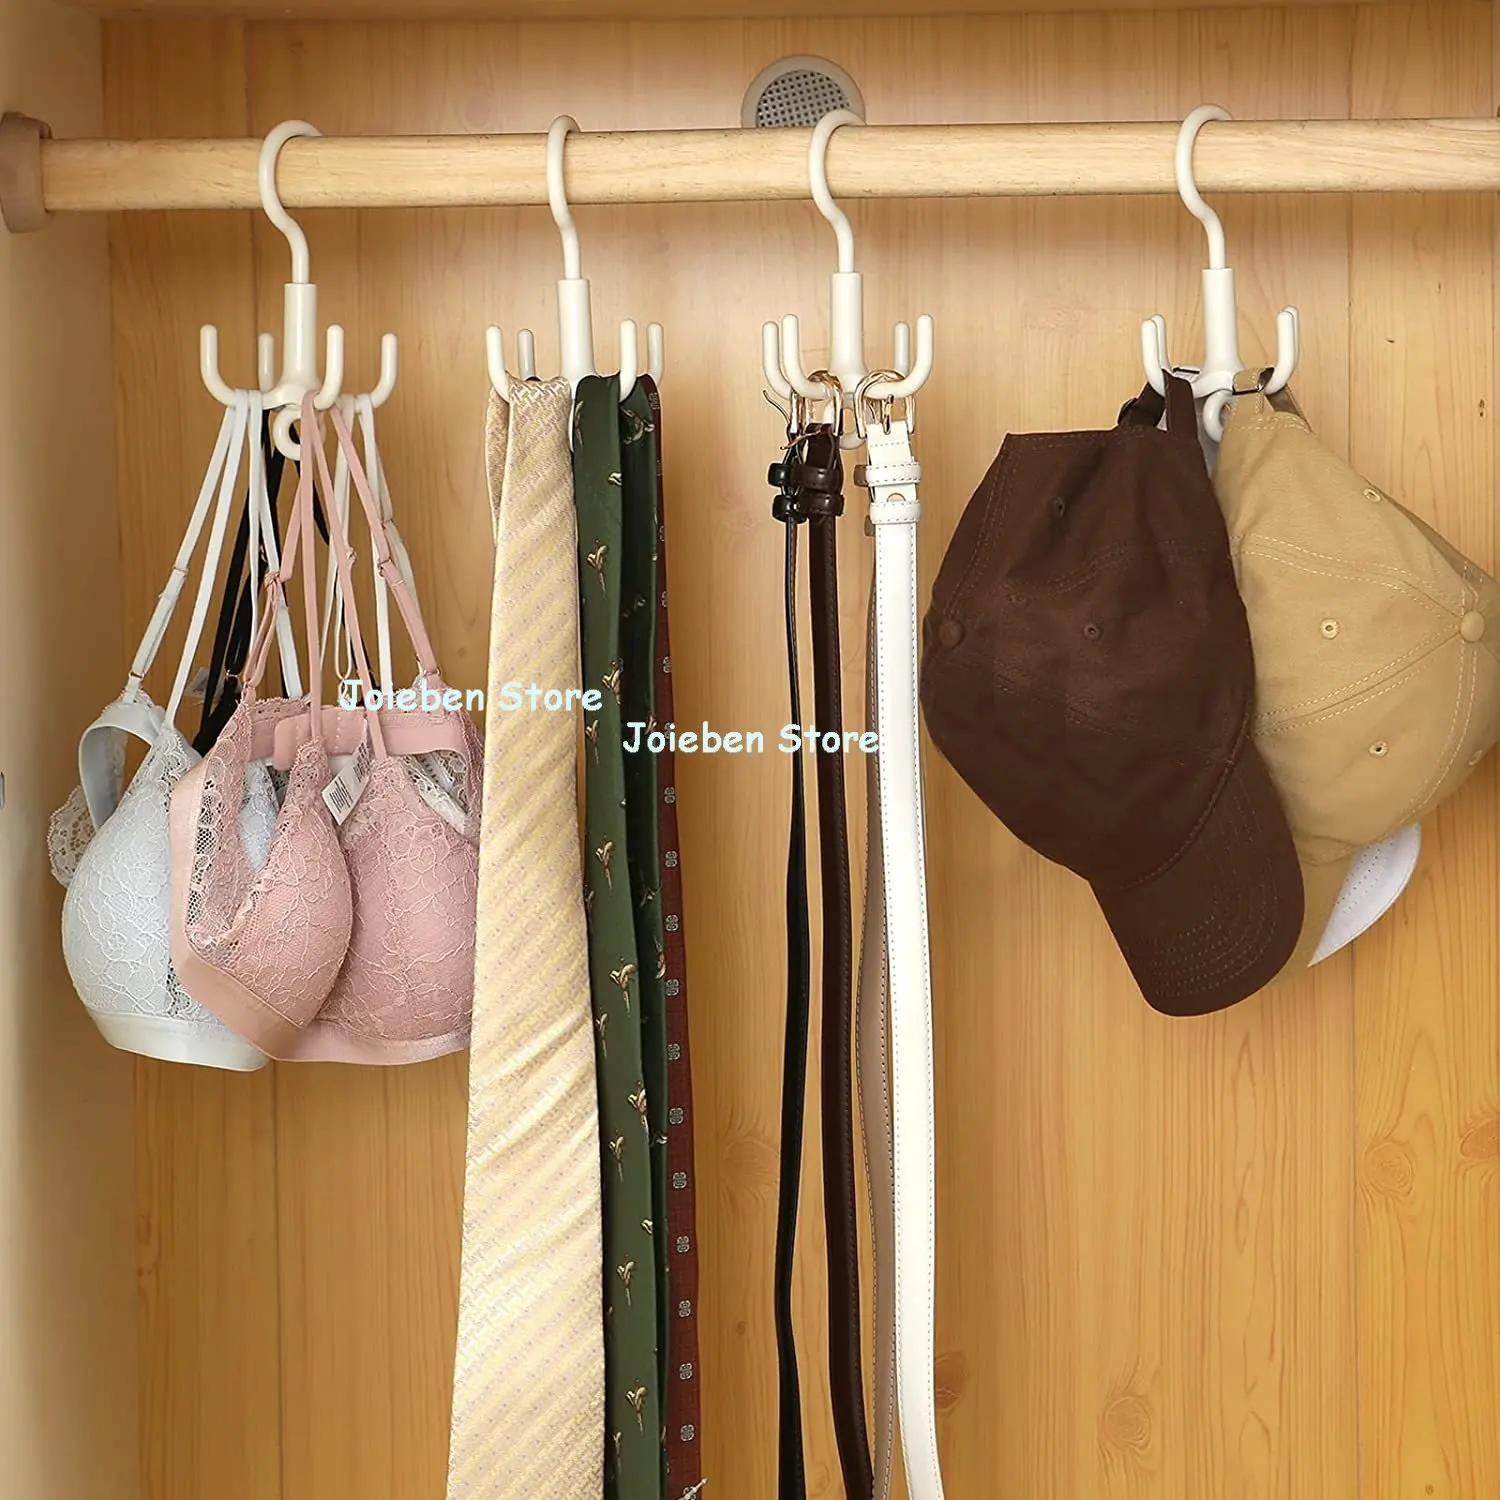 https://ae01.alicdn.com/kf/S9d9cd2973aed432f8e18694c9dc15802P/Space-Saving-Rotated-Hanger-Hooks-Belt-Organizer-Hanger-Closet-Stackable-Bra-Organizer-with-4-Claws-Clothes.jpg